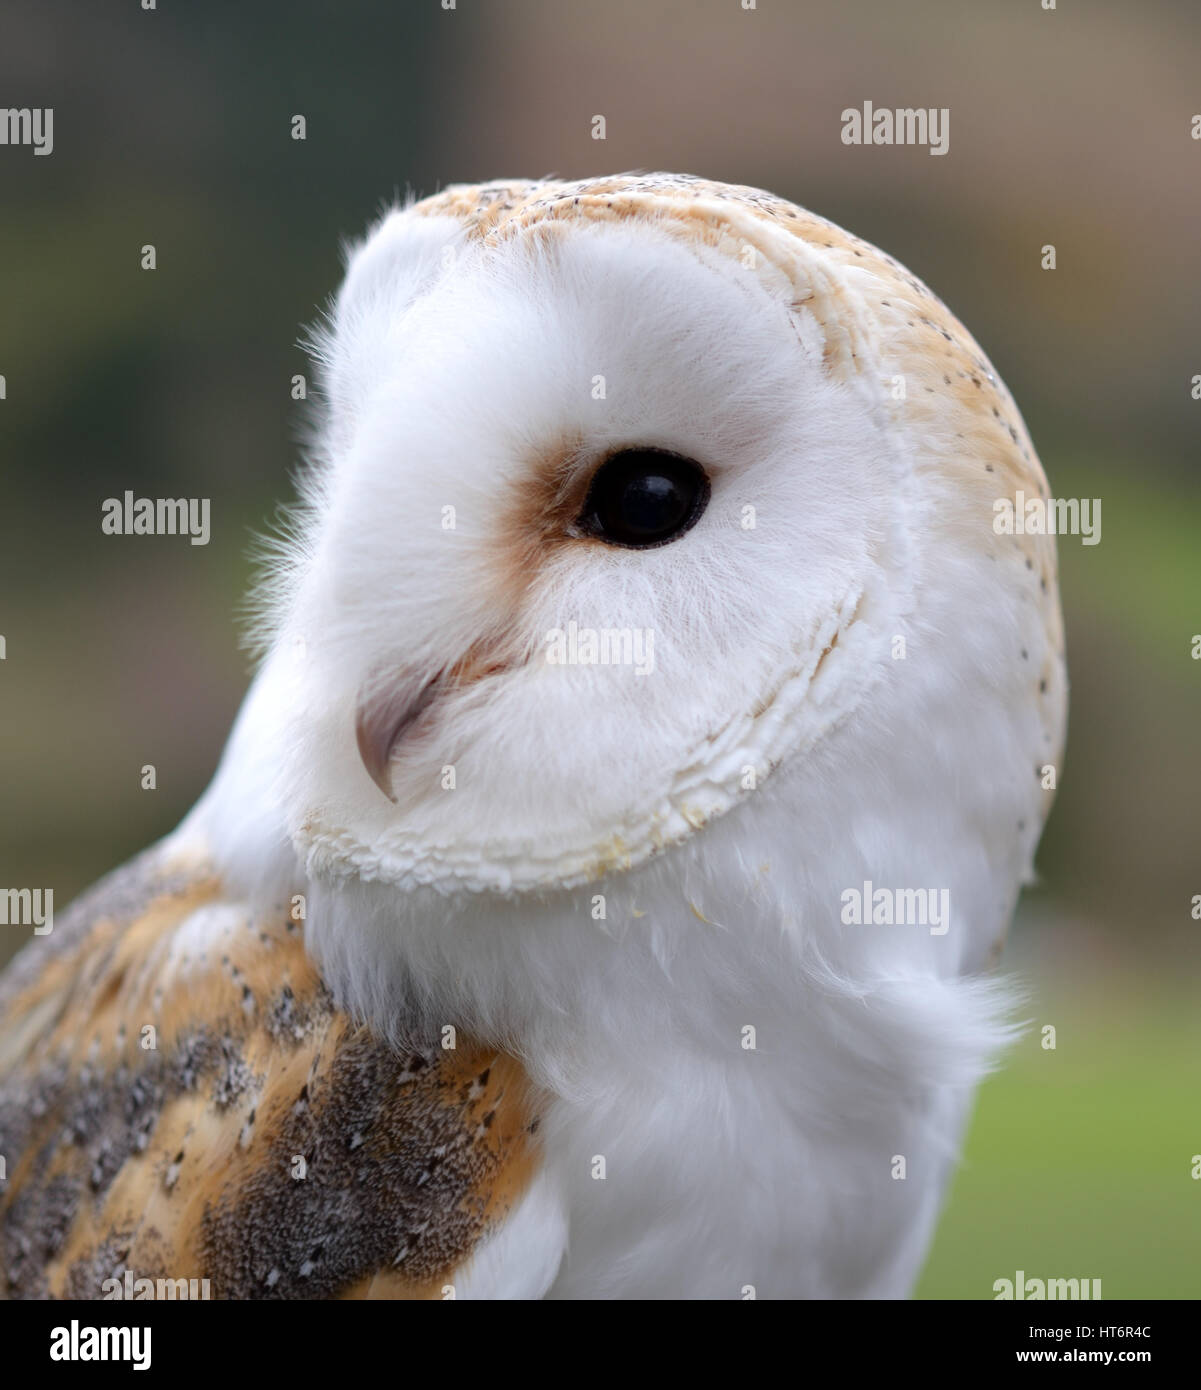 Barn owl face Stock Photo